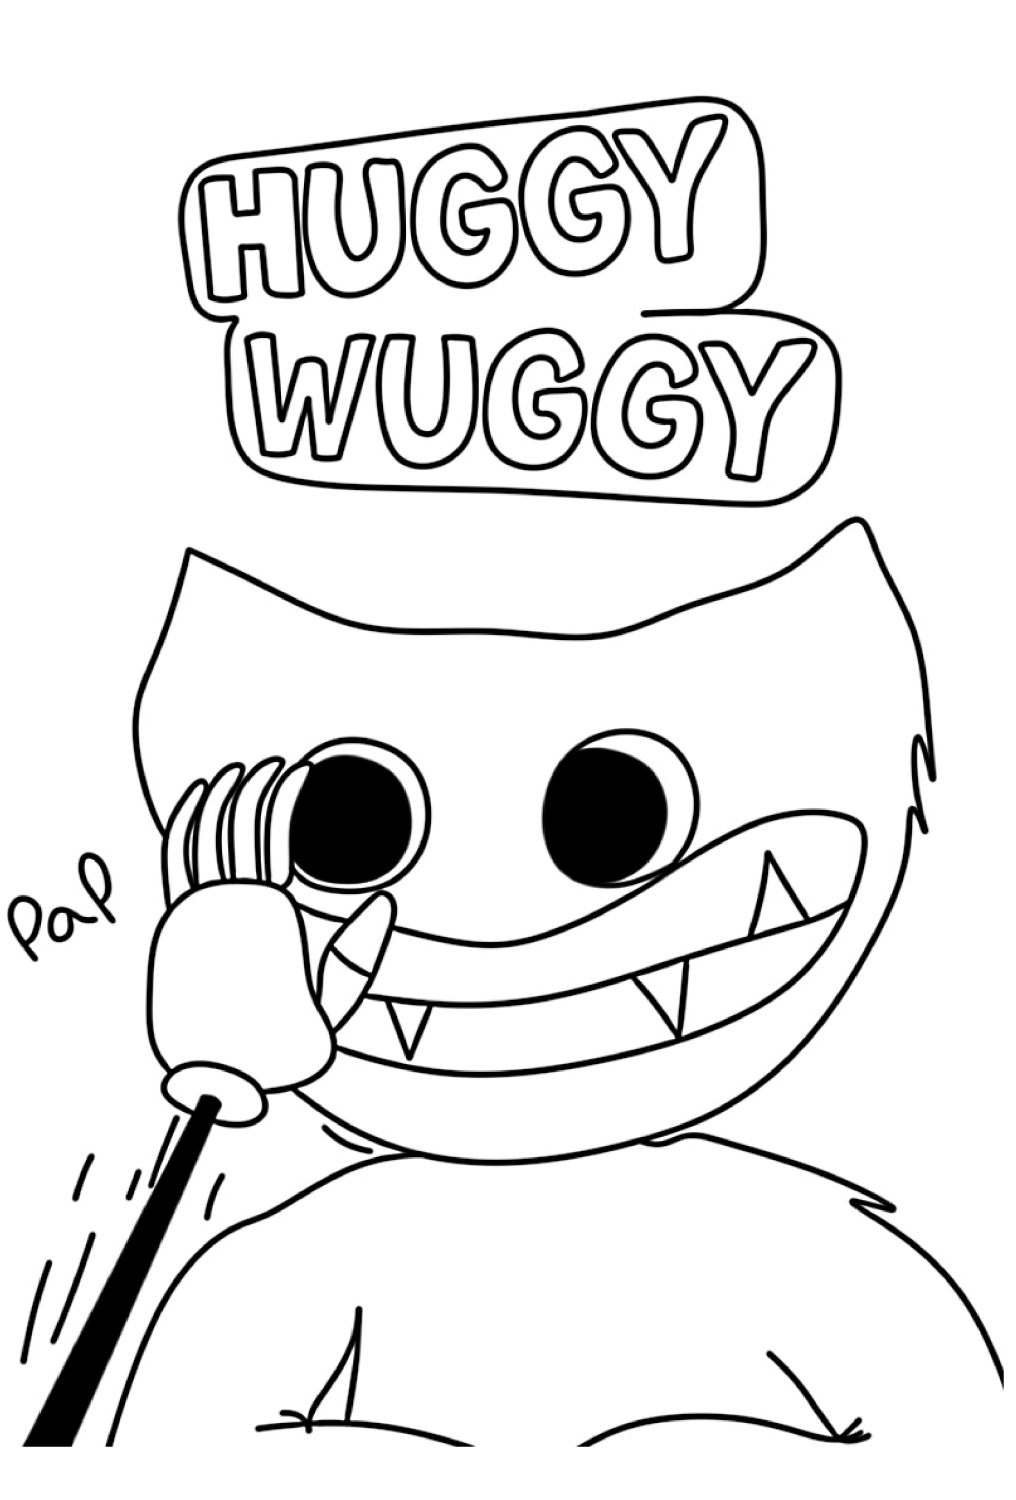 Desenho 29 de Huggy Wuggy para imprimir e colorir